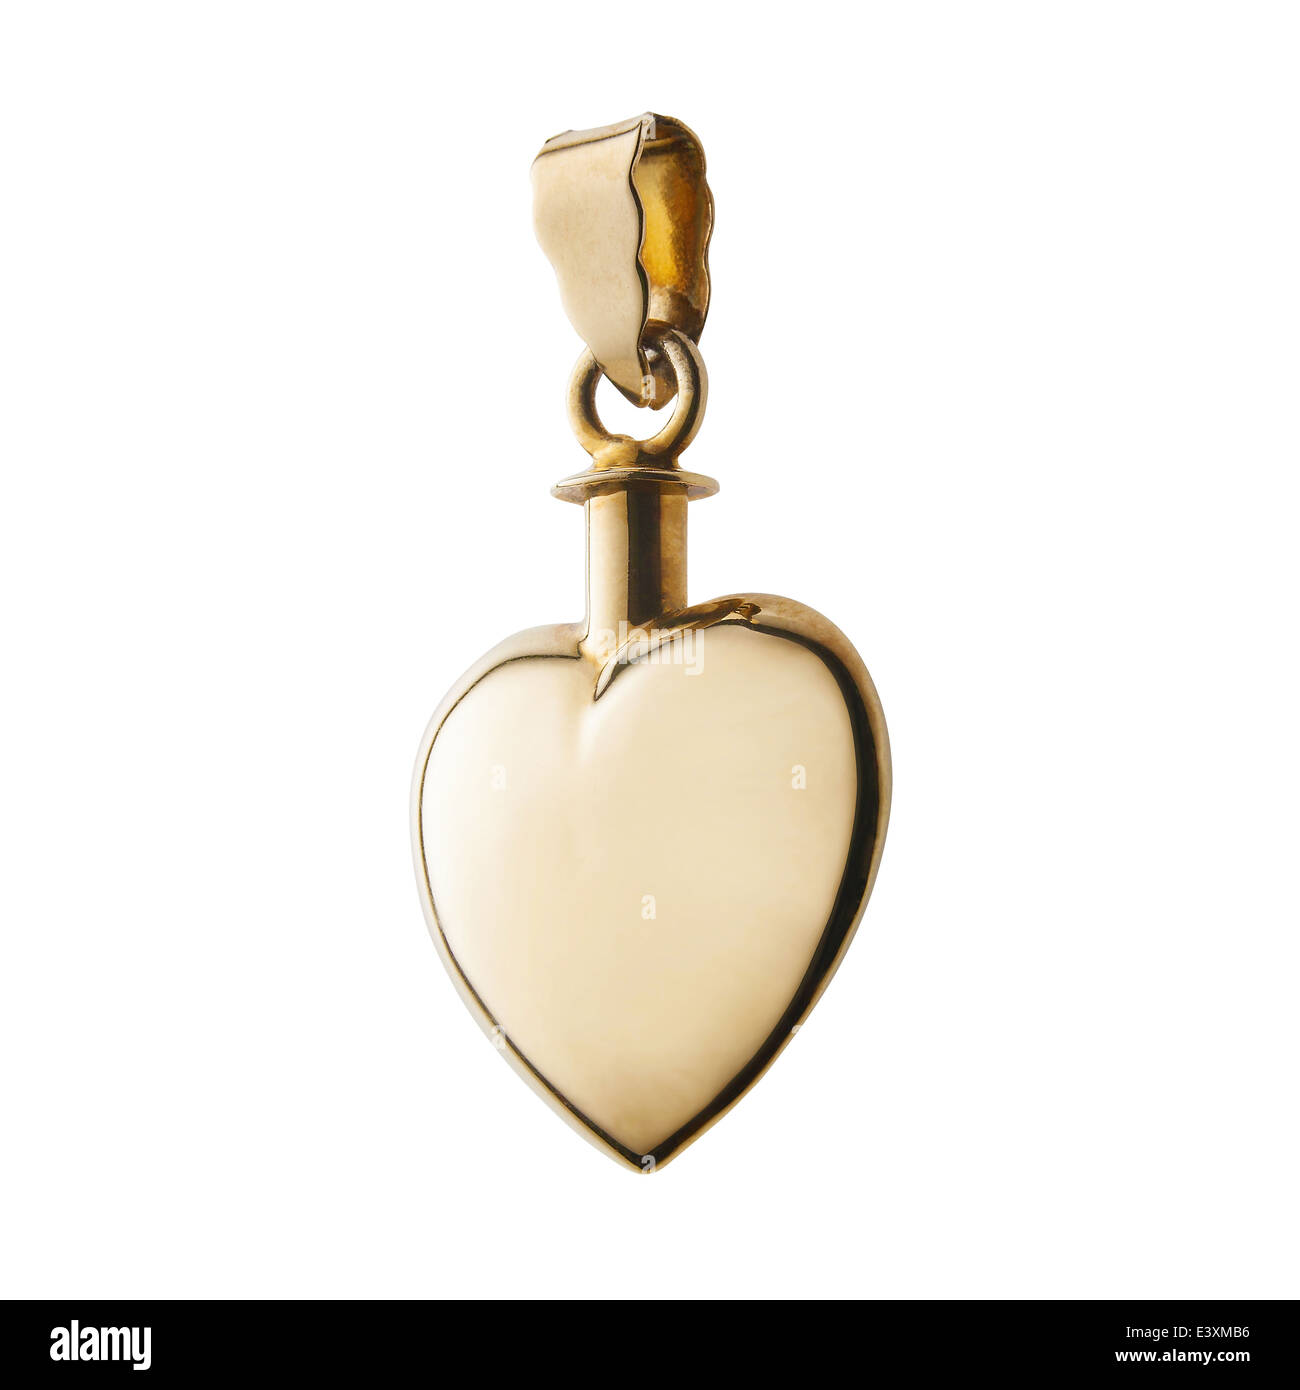 Pendant silver and gold, heart shaped locket lockets. tear drop shape jewelery. on white background. Stock Photo